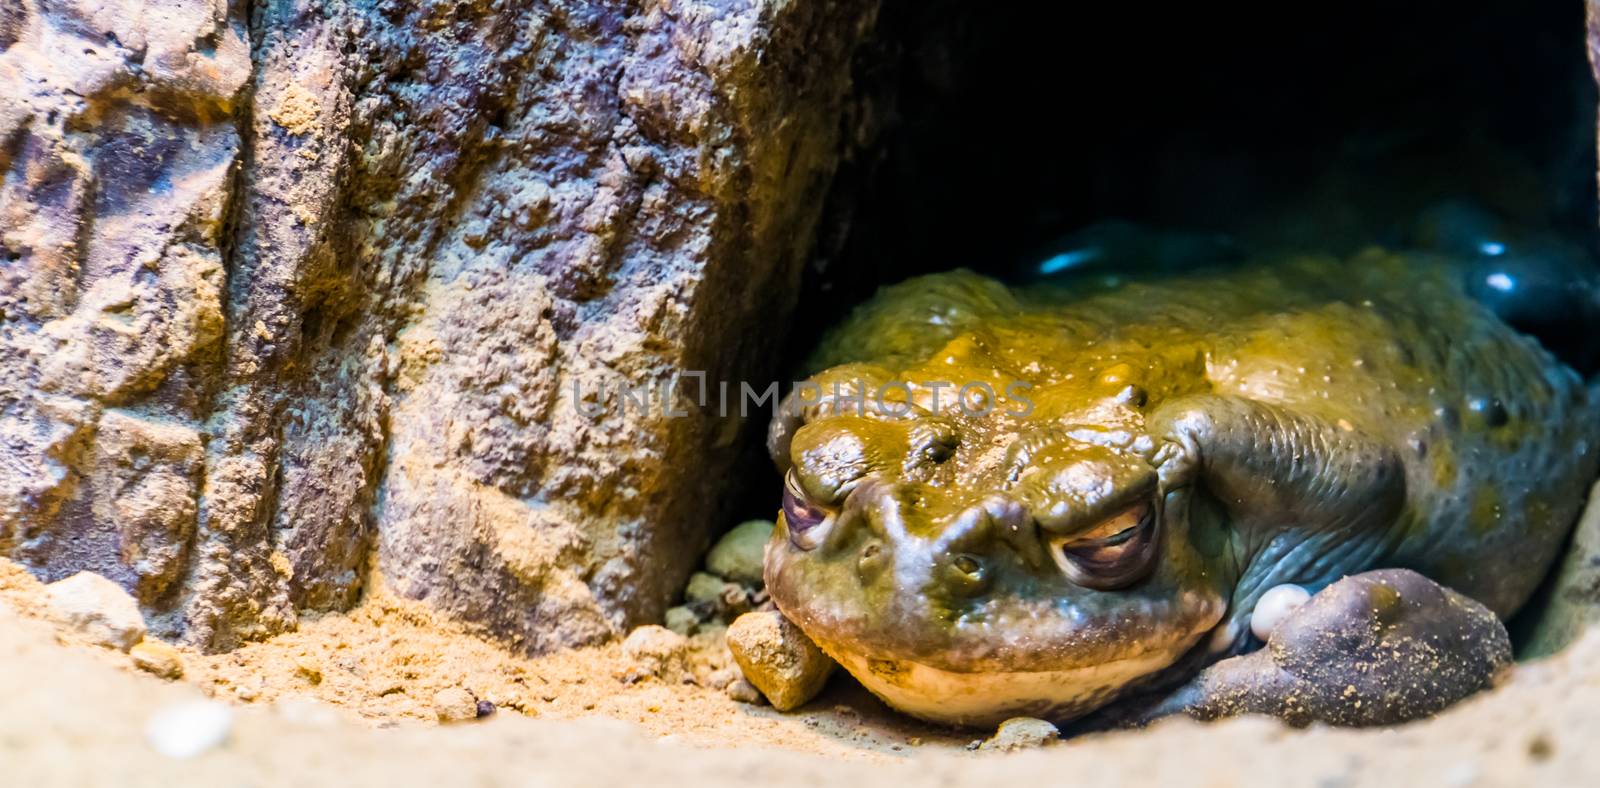 closeup of a colorado river toad hiding under a rock, tropical amphibian specie from mexico